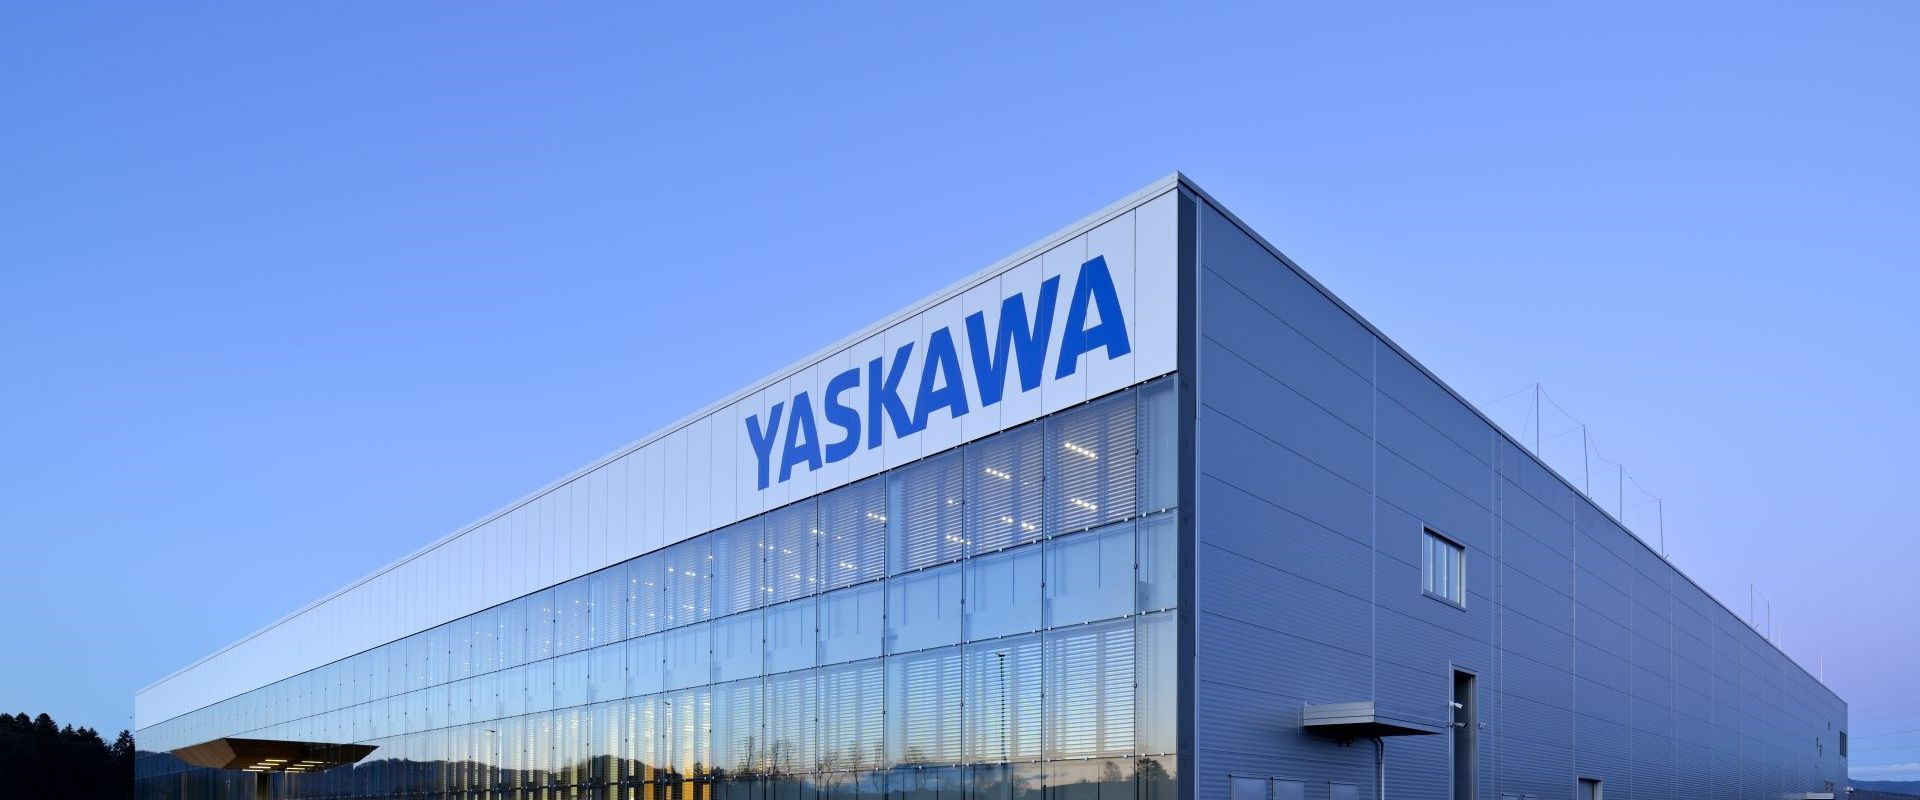 Yaskawa robot factory